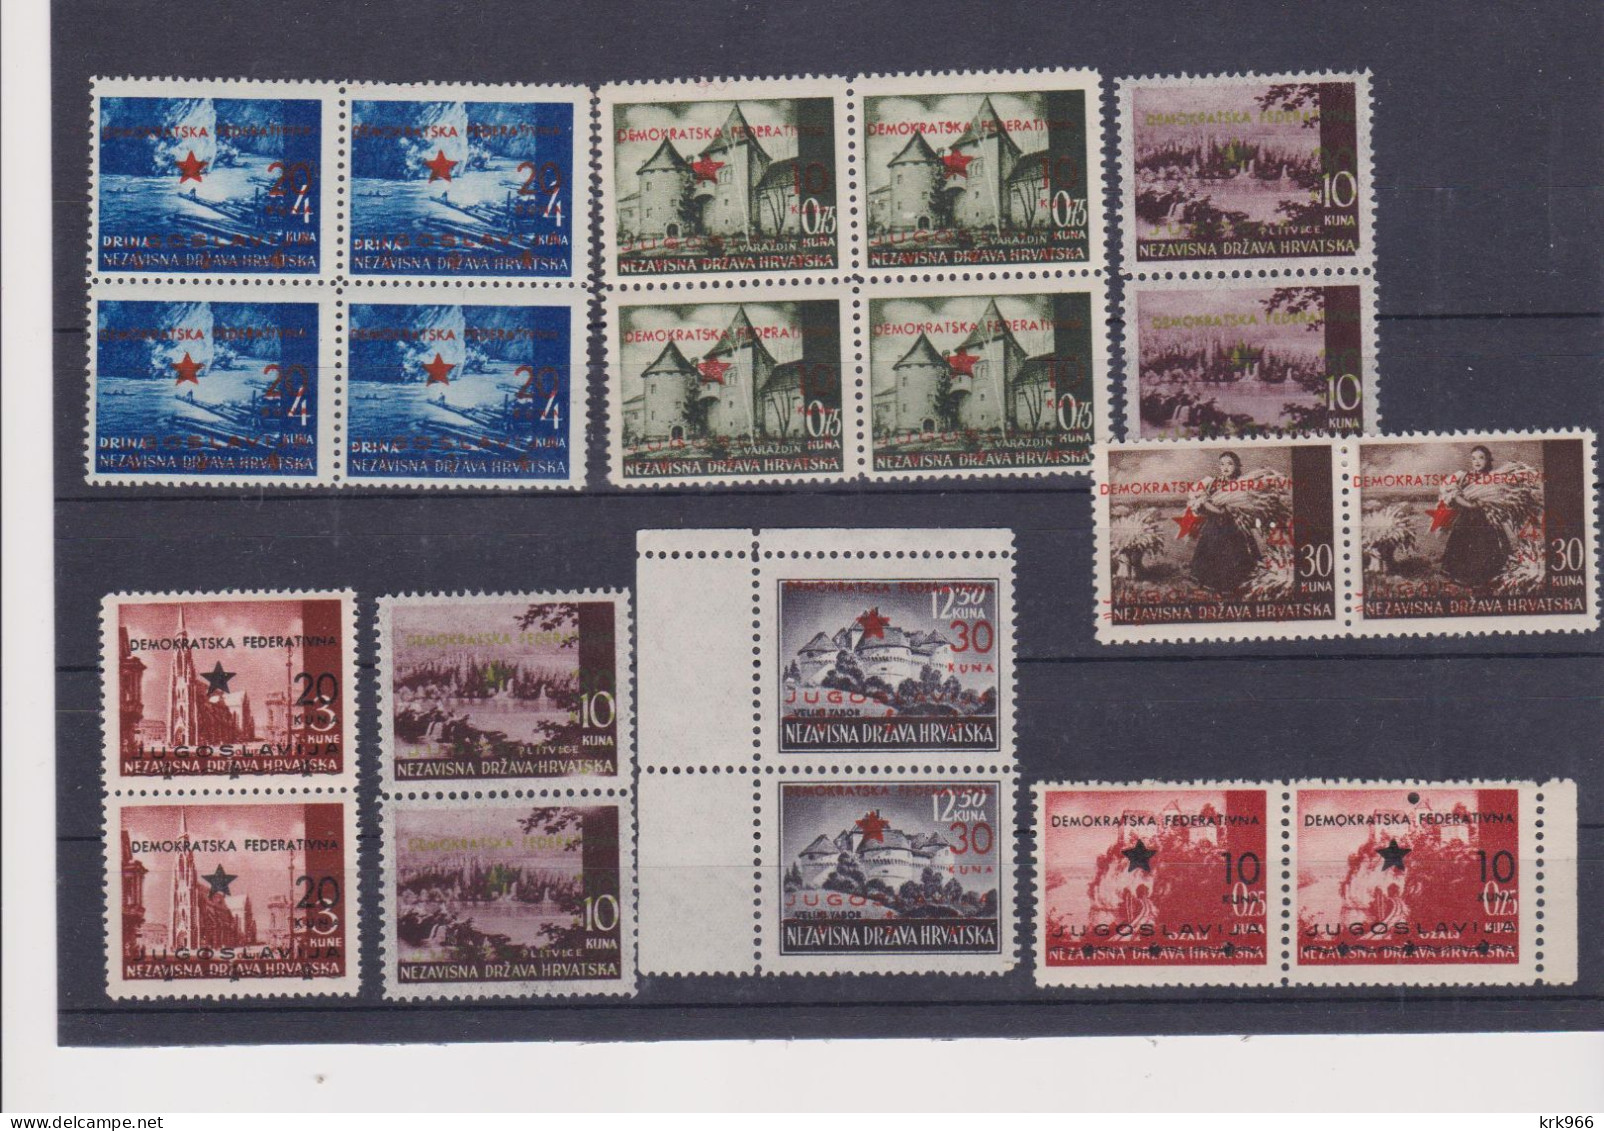 YUGOSLAVIA,1945 CROATIA SPLIT ISSUE Stamps Lot MNH - Neufs